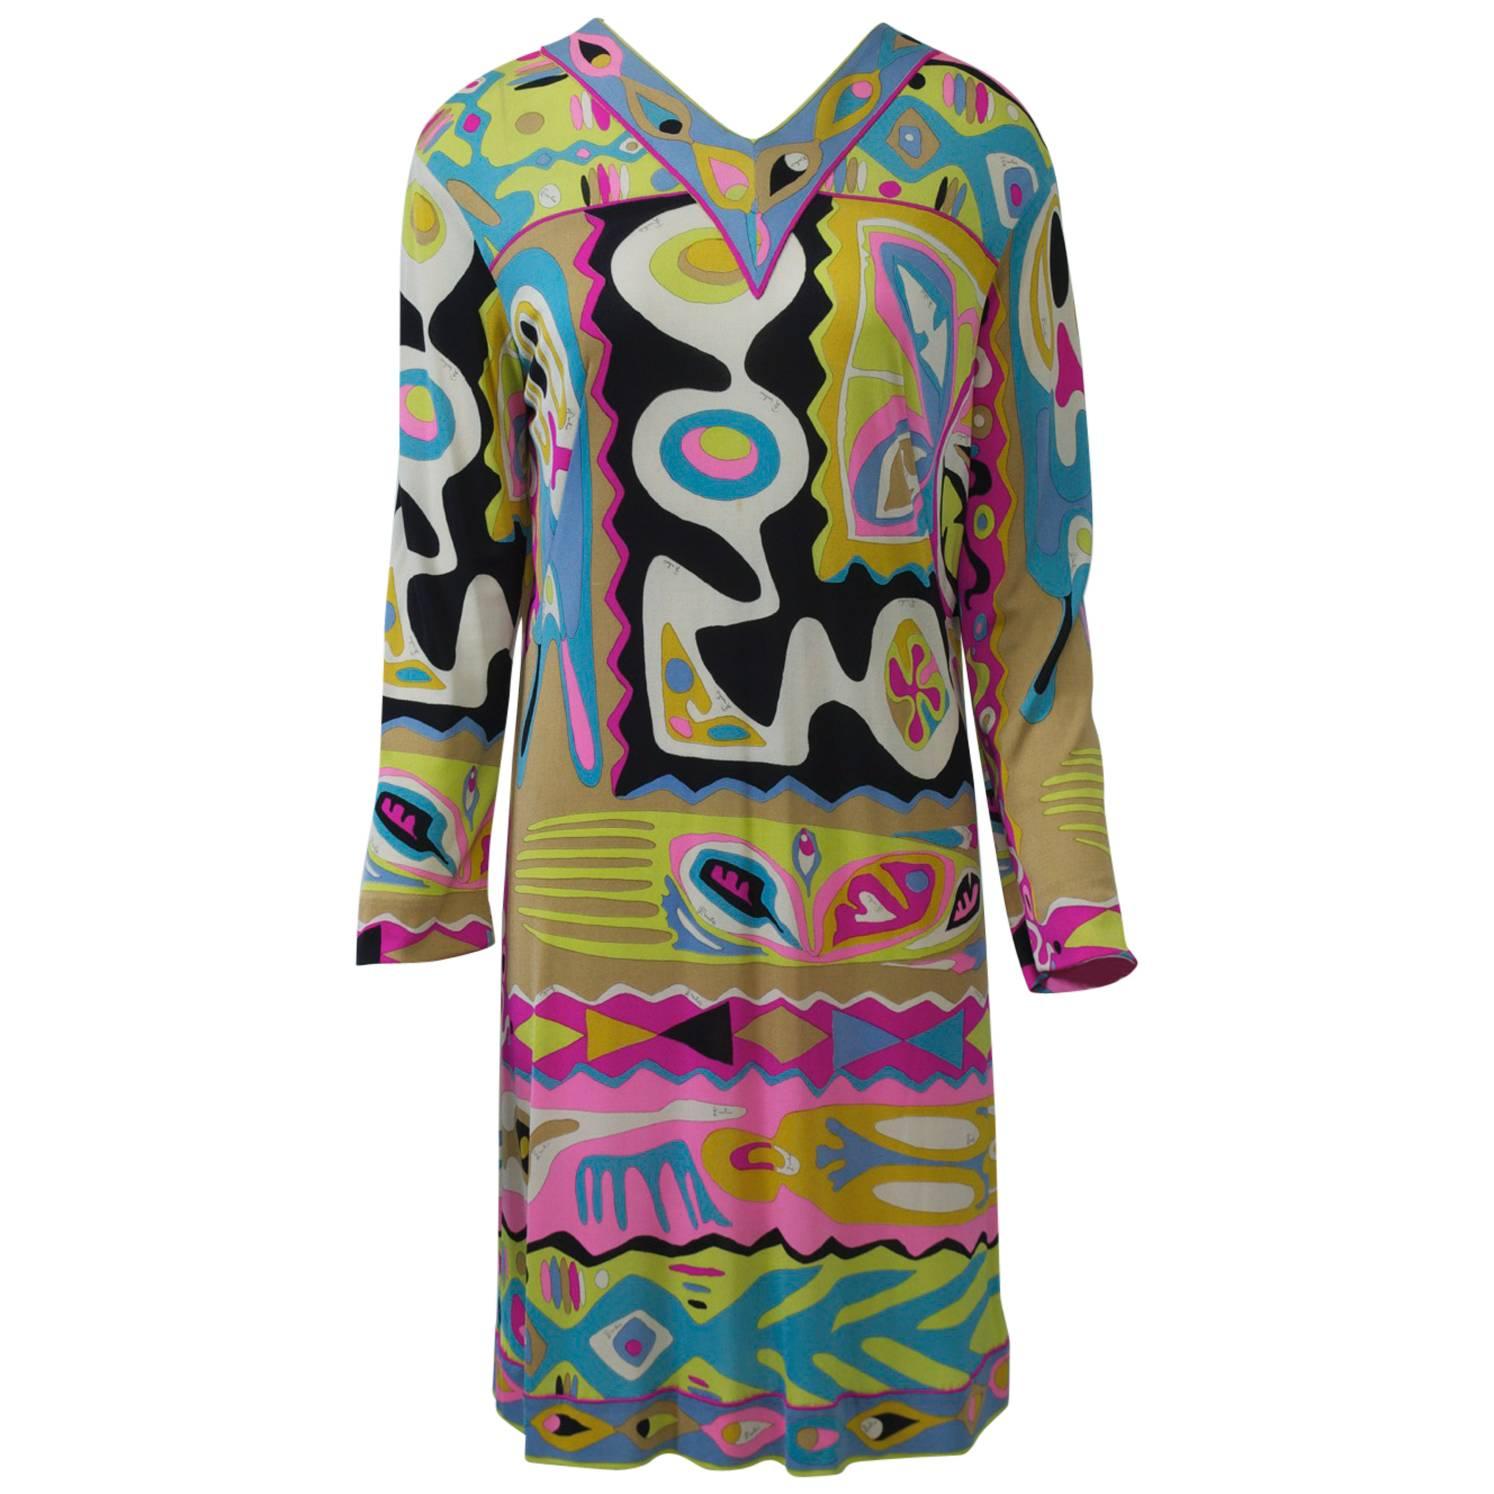 Pucci c. 1970 Abstract Print Dress